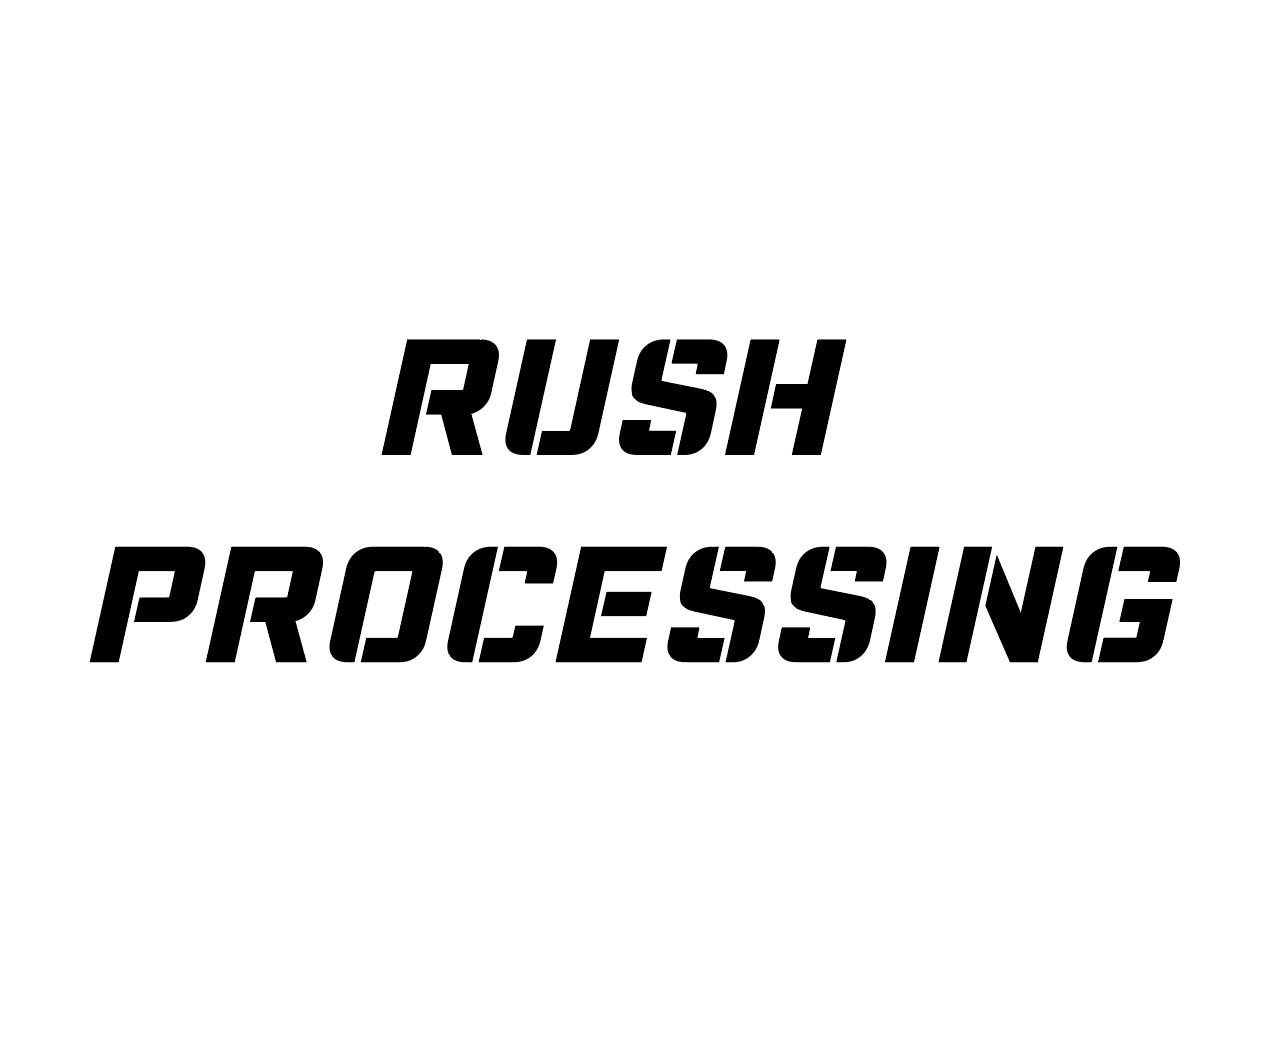 Rush Processing